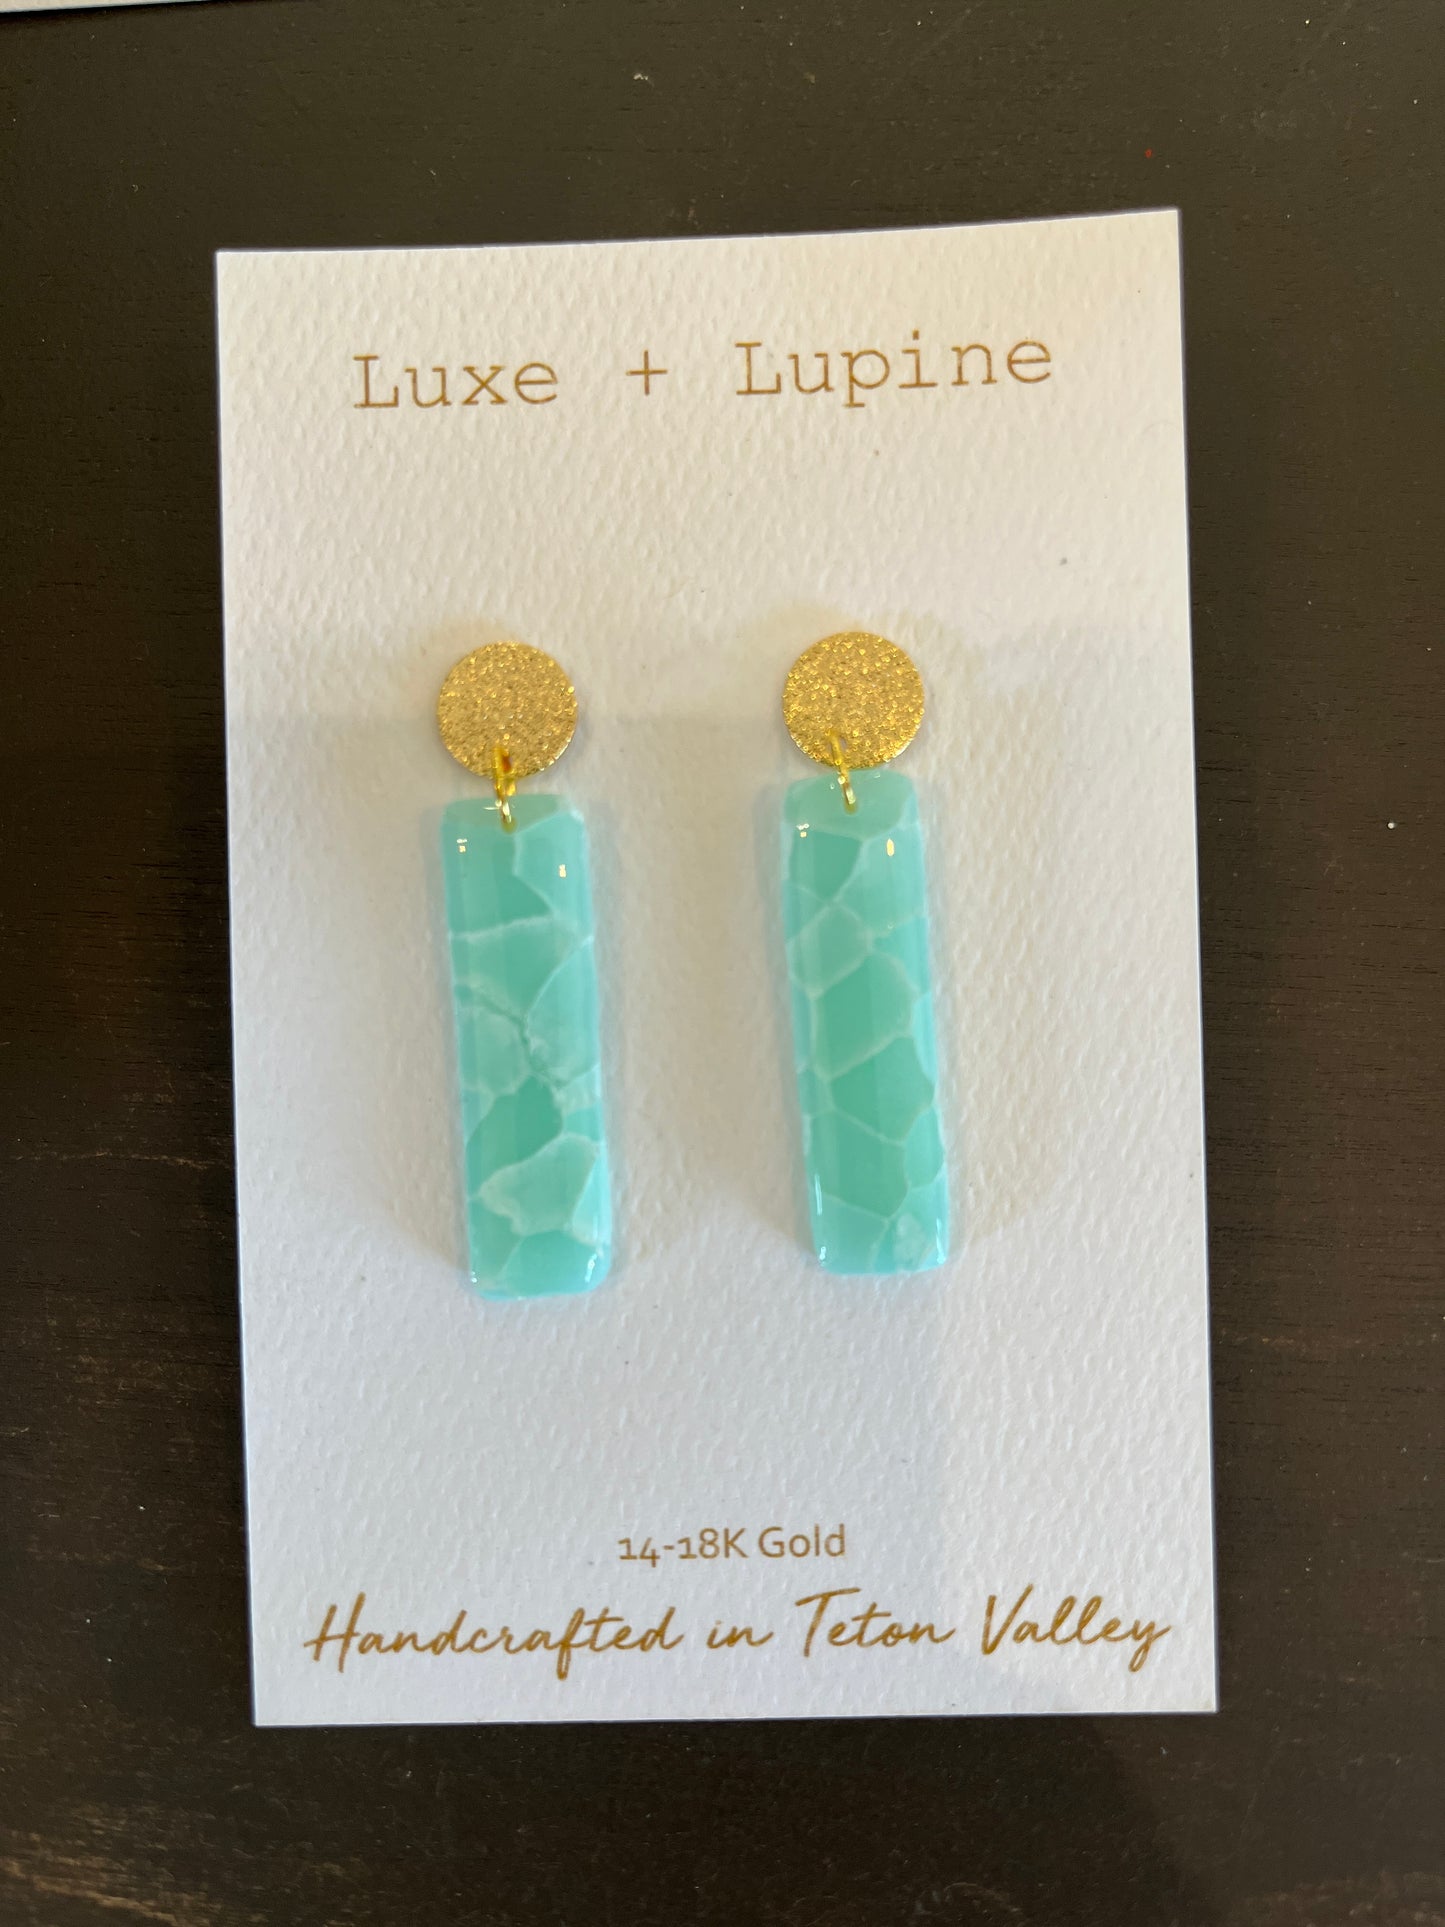 Luxe + Lupine: Mini Mollie Pendants